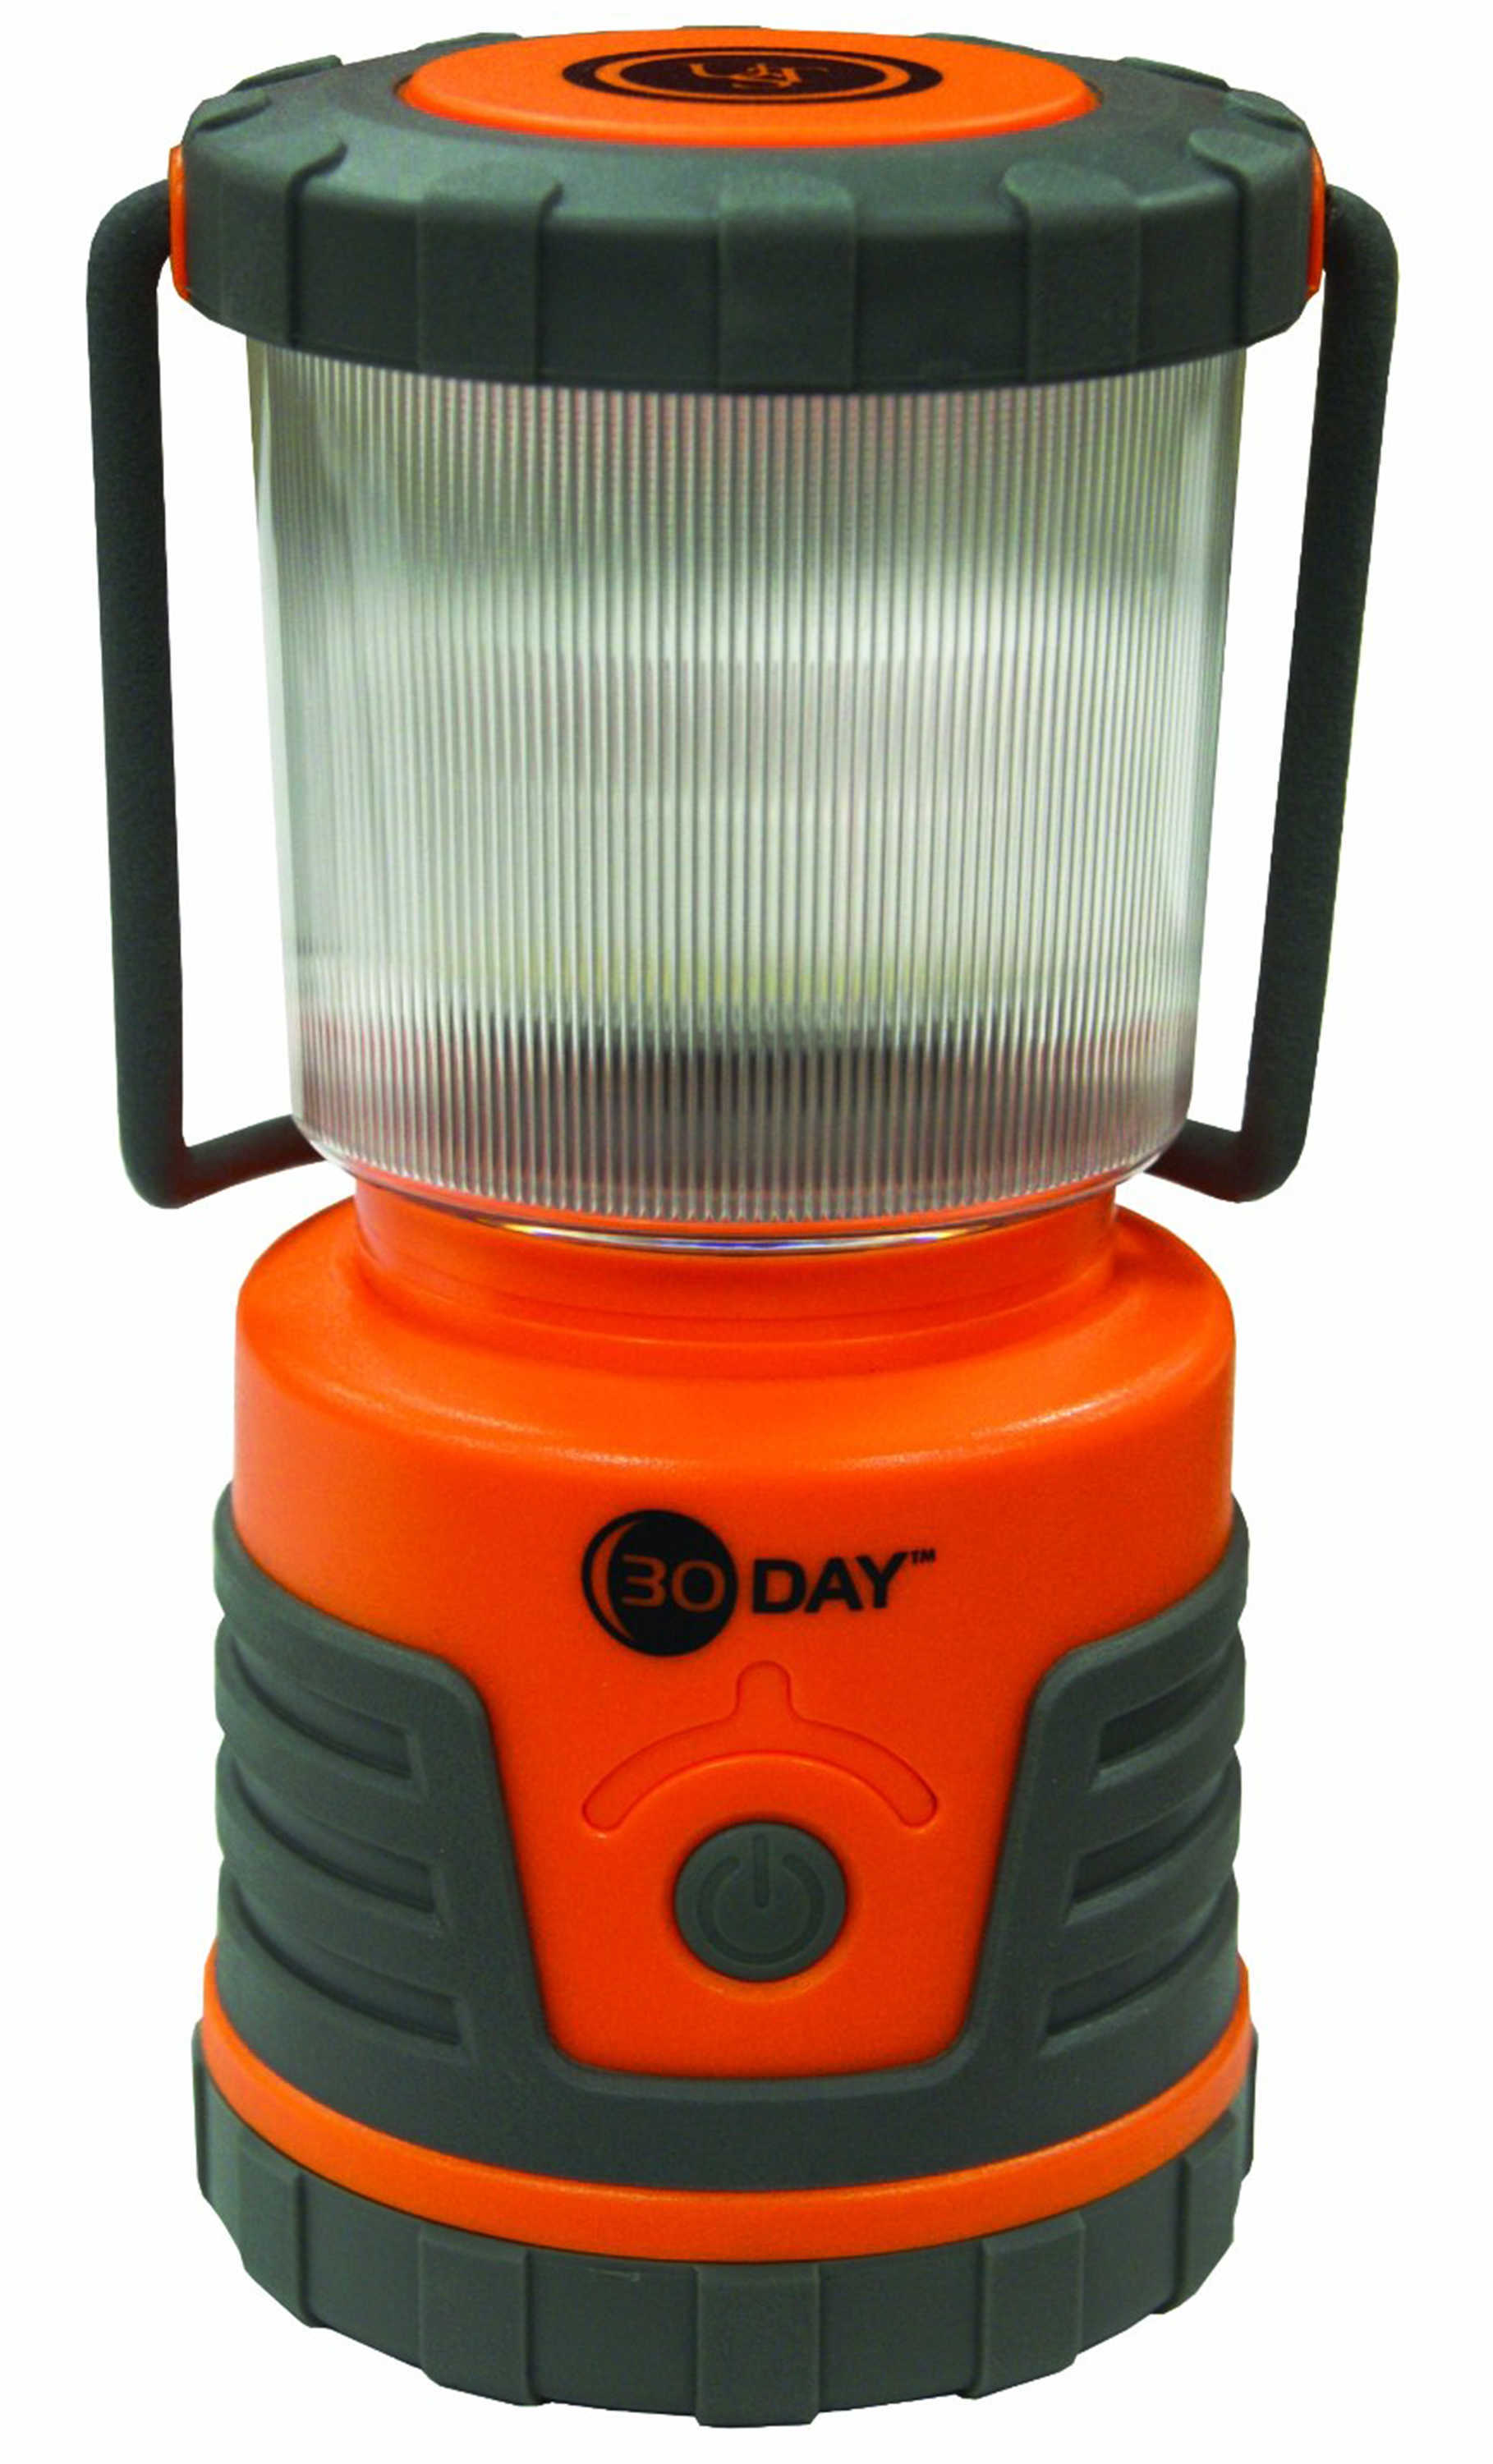 Led 300 Lumens 30-Day Lantern UST - Ultimate Survival Technologies 20-Pl20C3D-08 Flashlight Orange